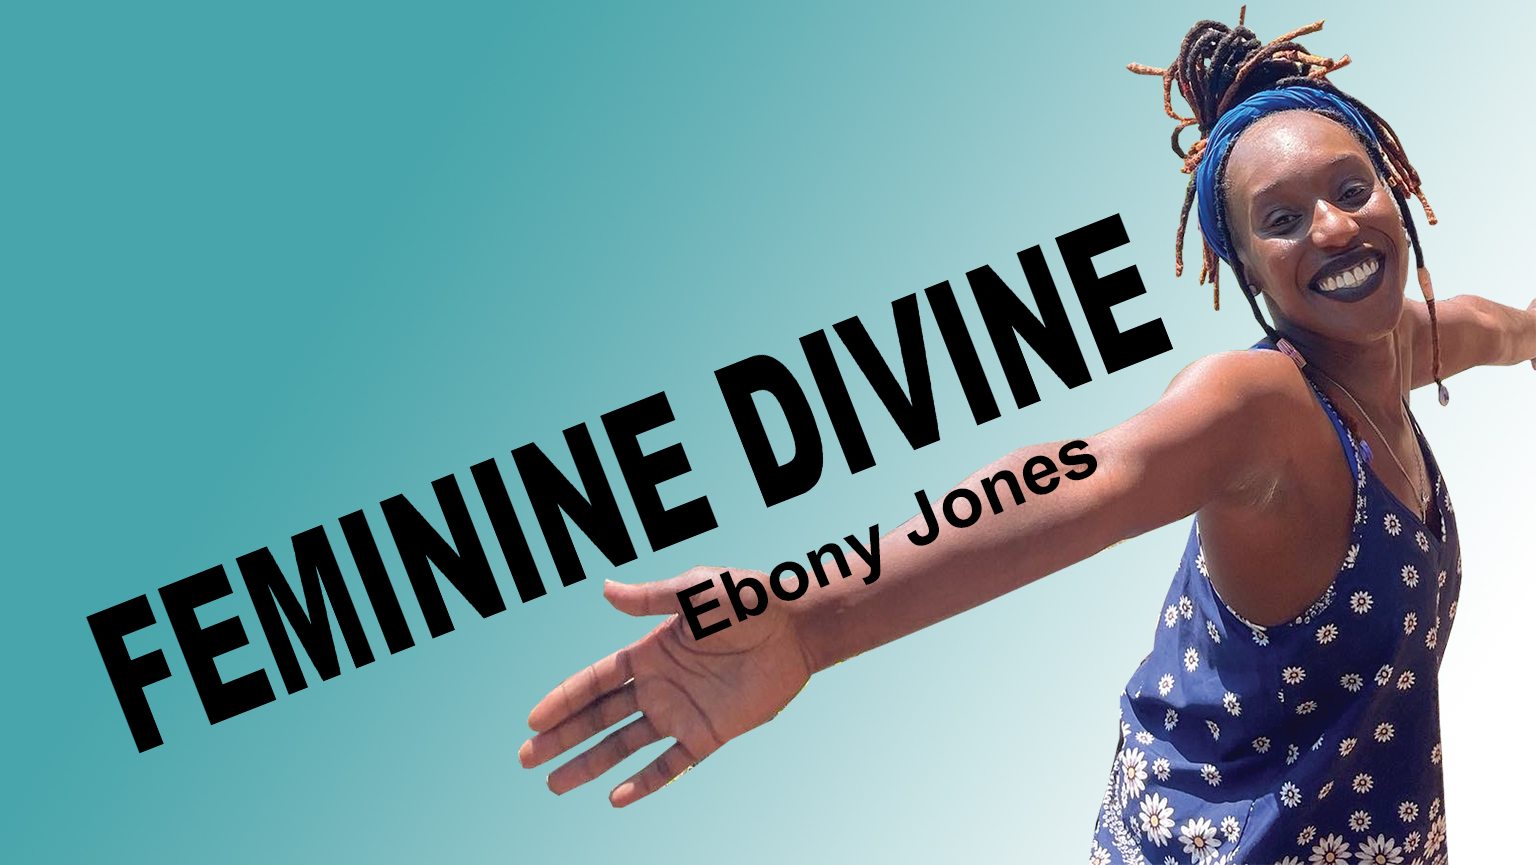 Feminine Divine – Ebony Jones